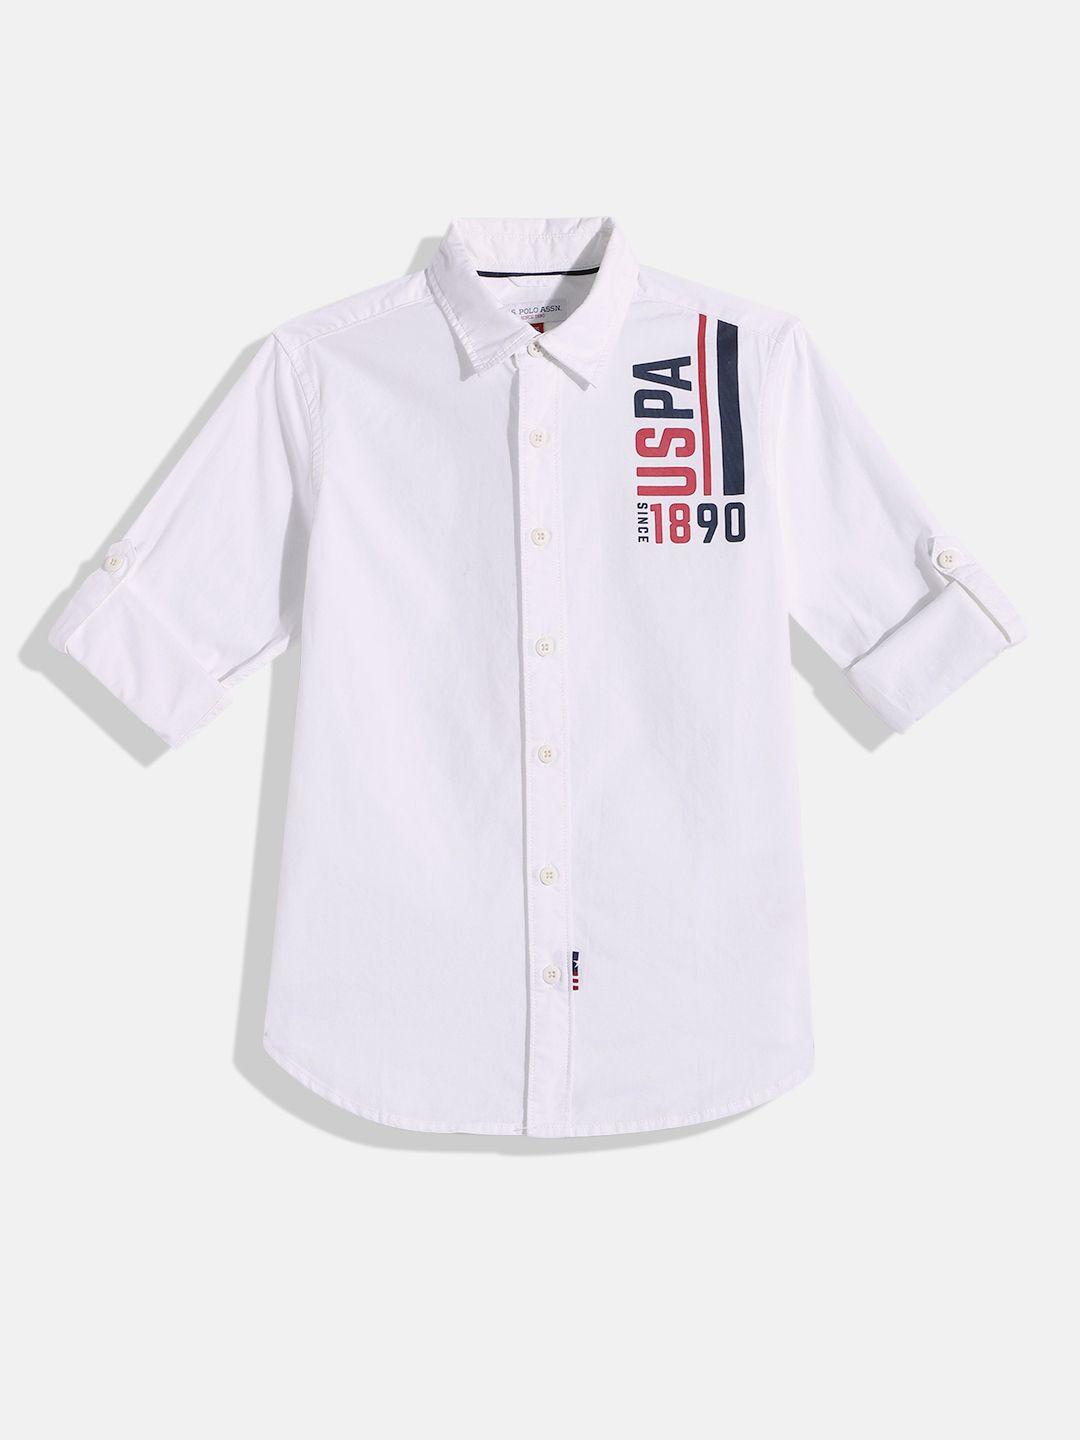 u.s. polo assn. kids boys brand logo printed semi sheer pure cotton casual shirt